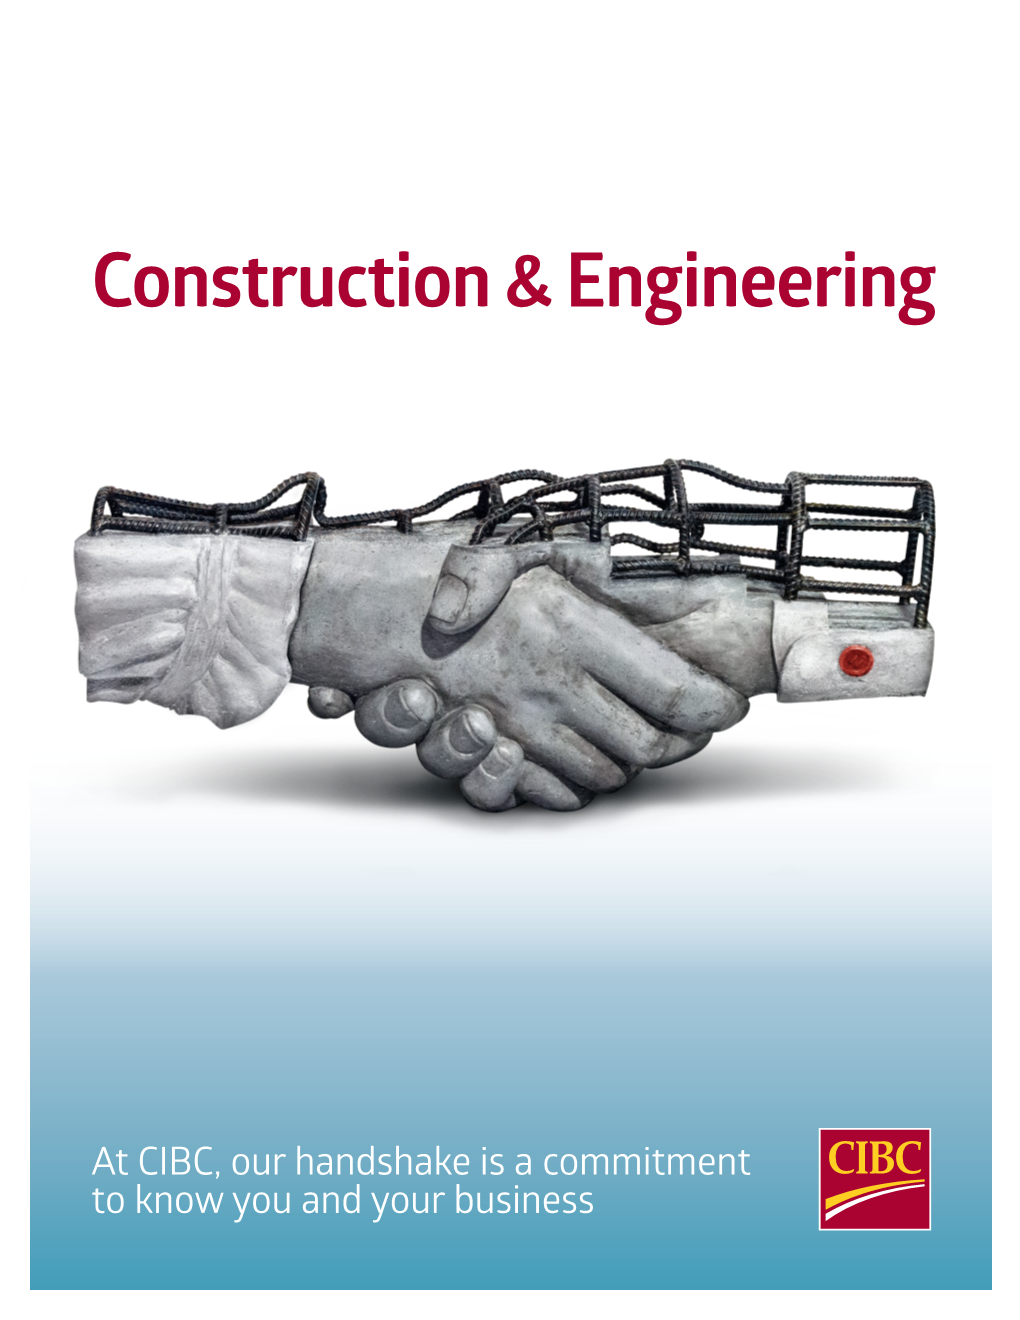 Construction & Engineering Brochure